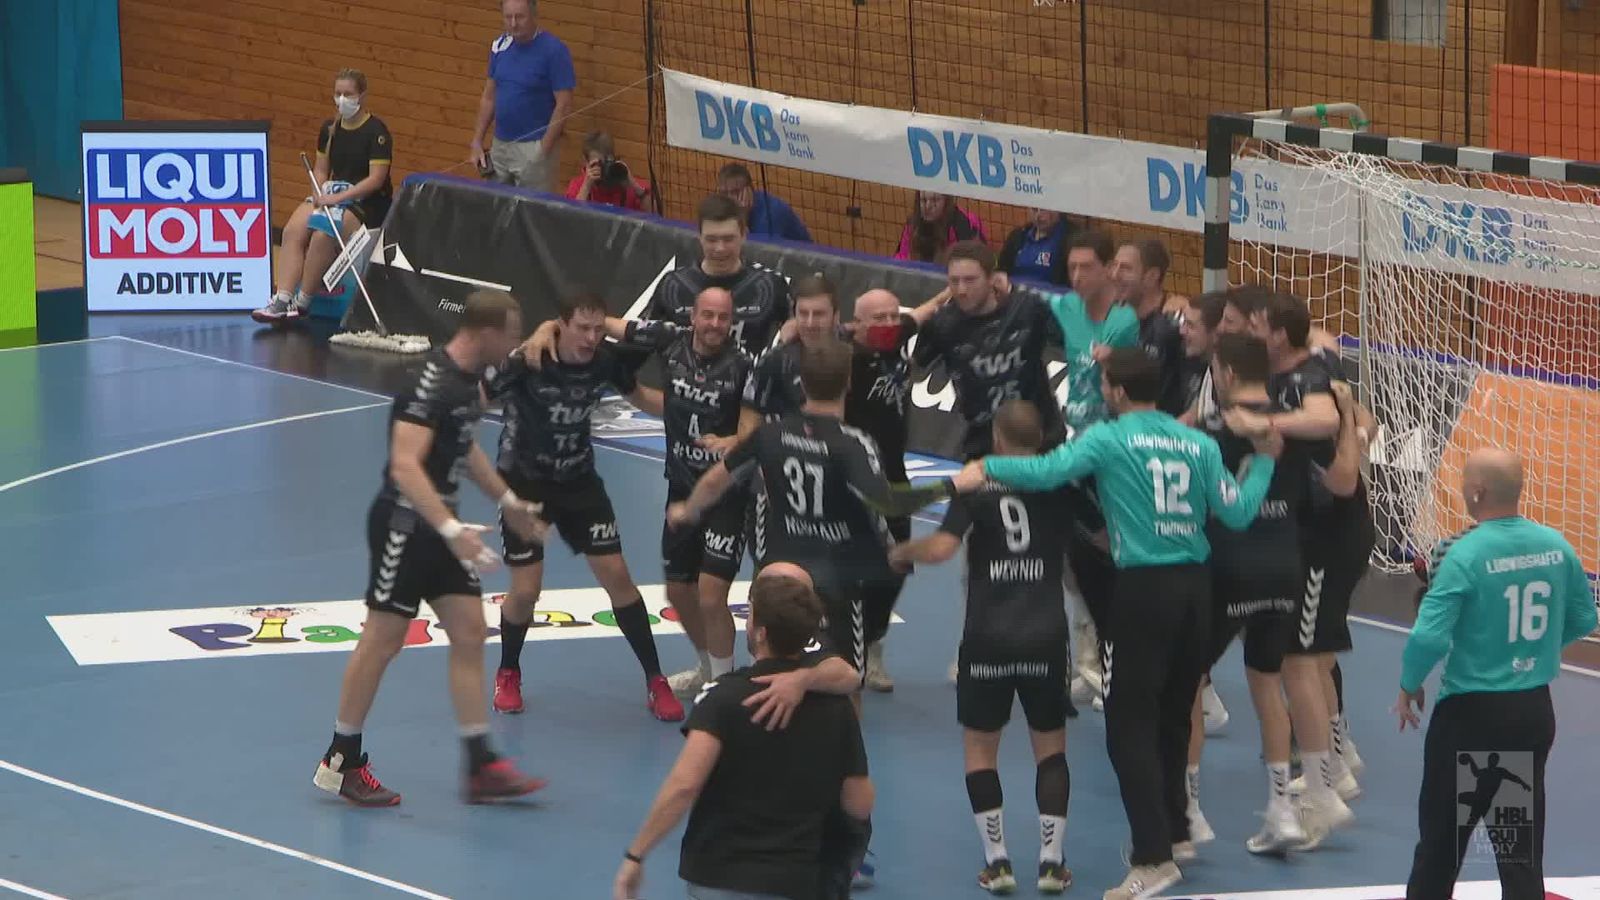 Handball Ludwigsburg